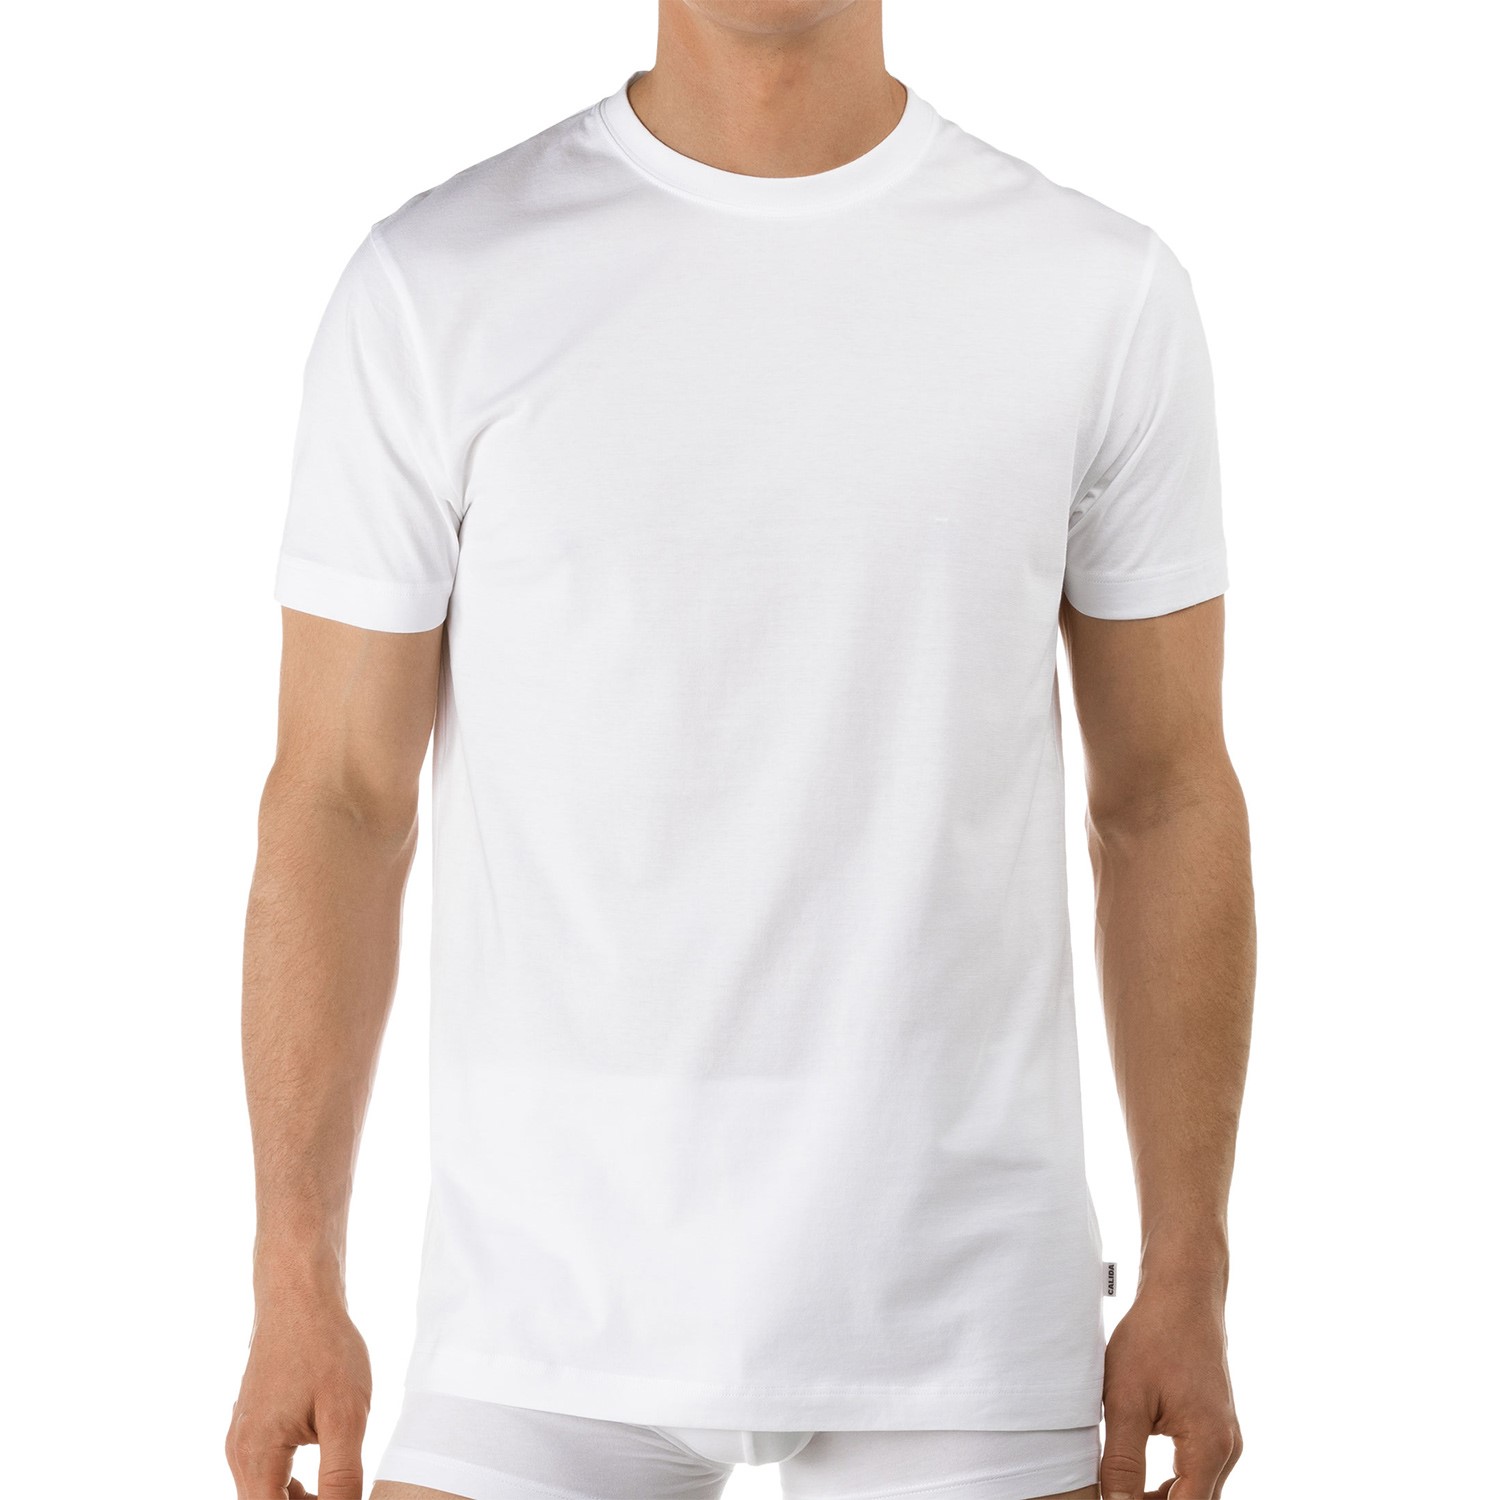 Calida Activity Cotton T-shirt Crew Neck - T-shirts - Clothing ...